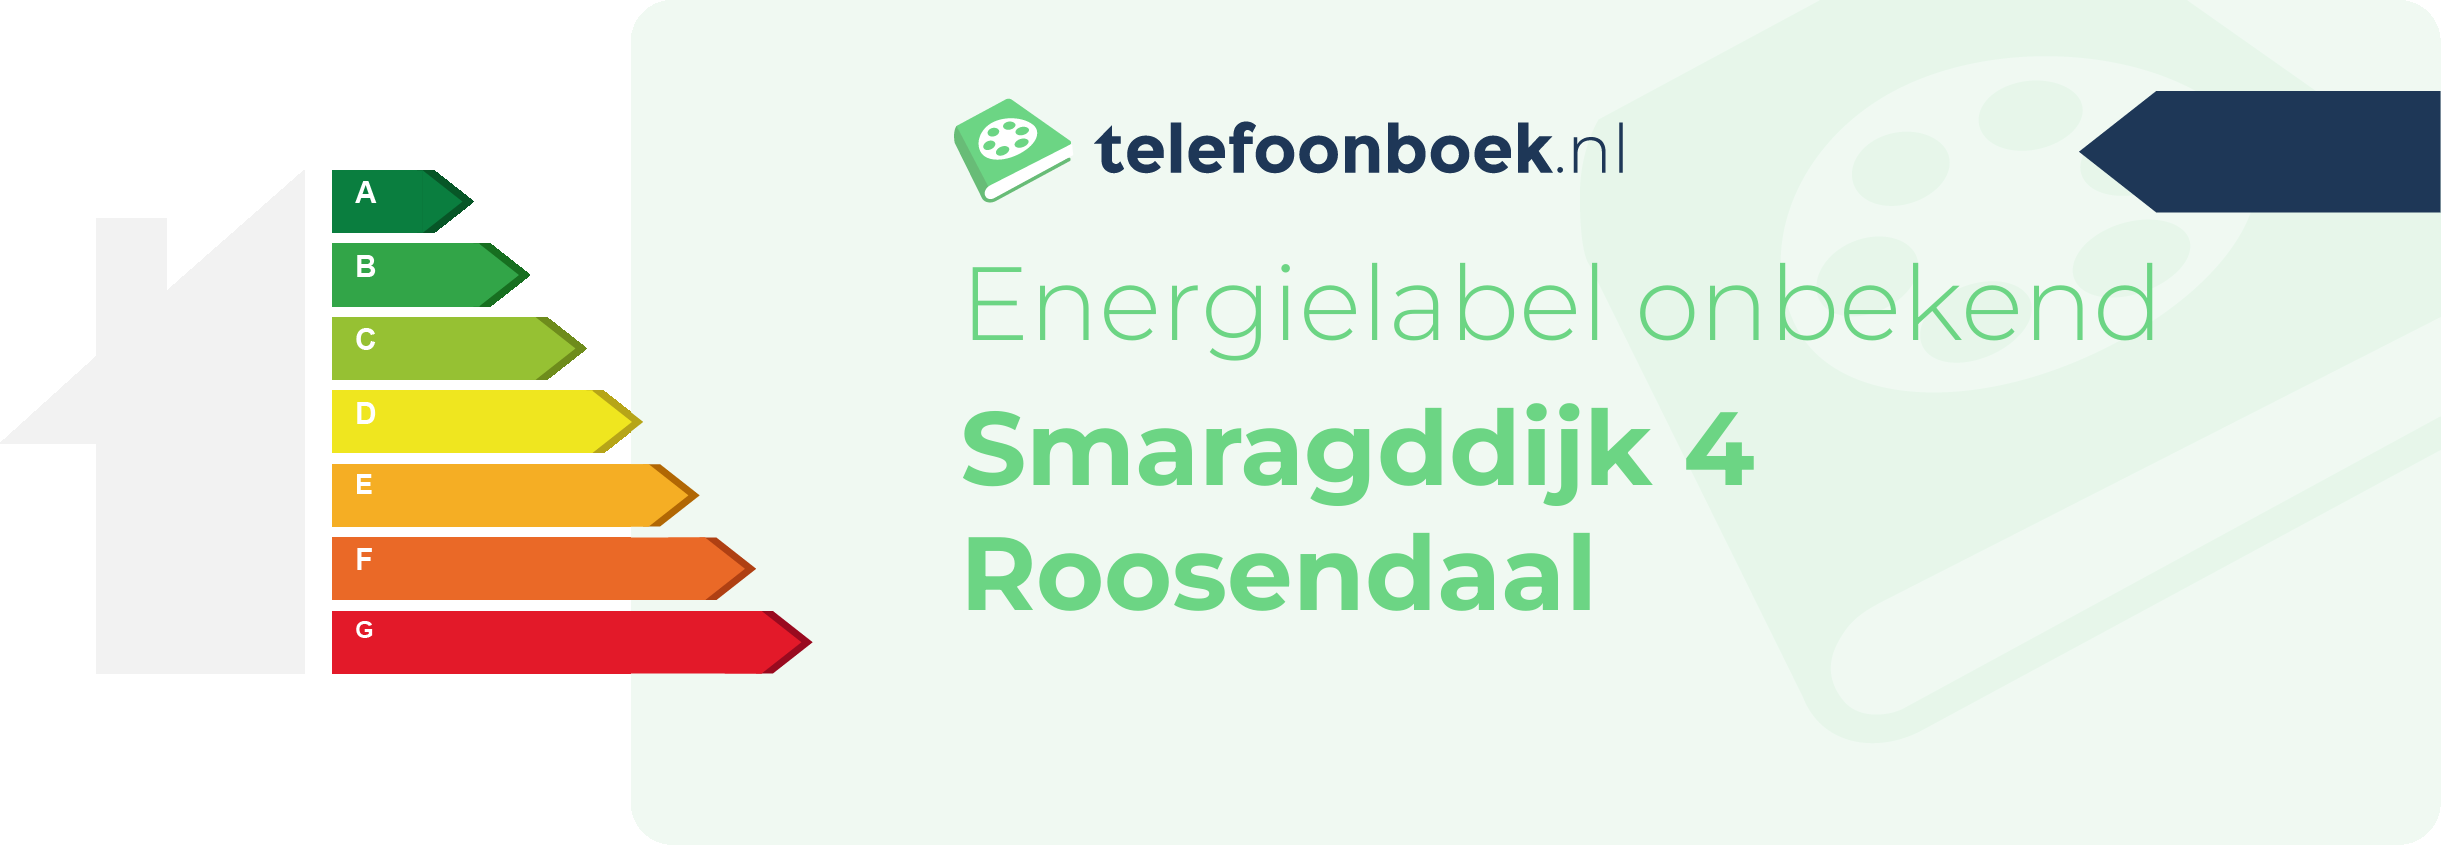 Energielabel Smaragddijk 4 Roosendaal